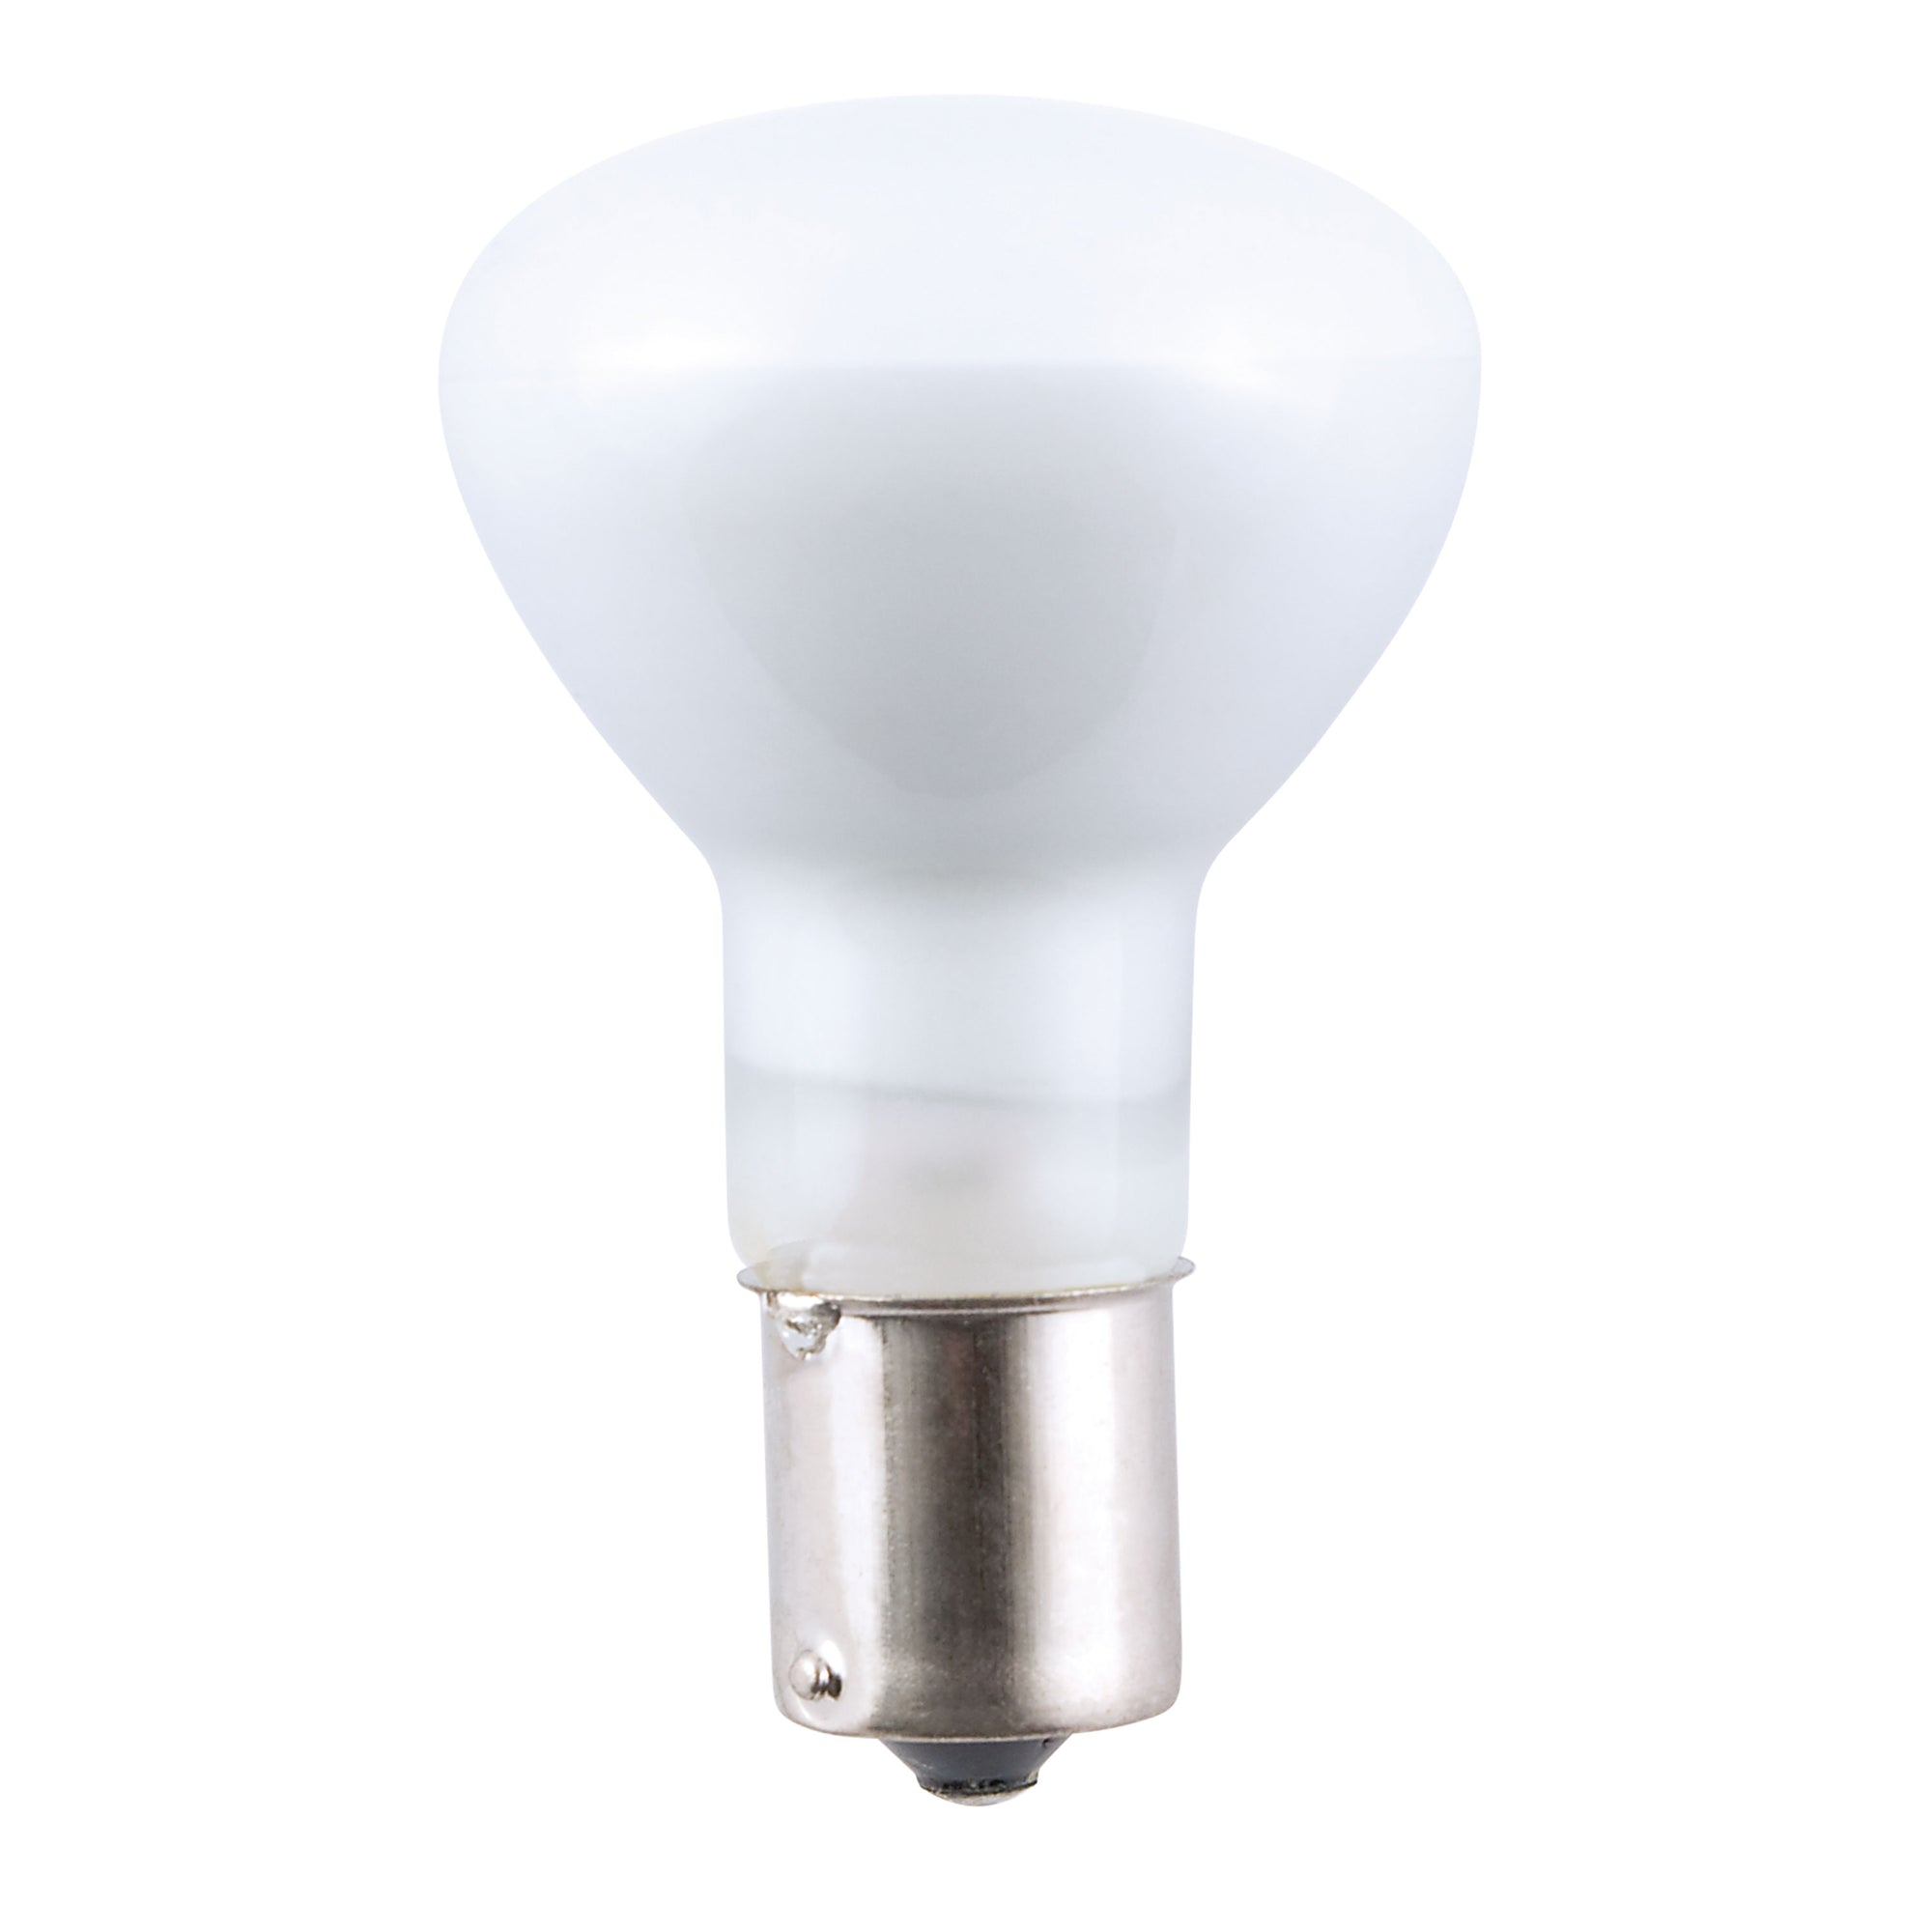 AP Products 016-01-1383 Bulb #1383